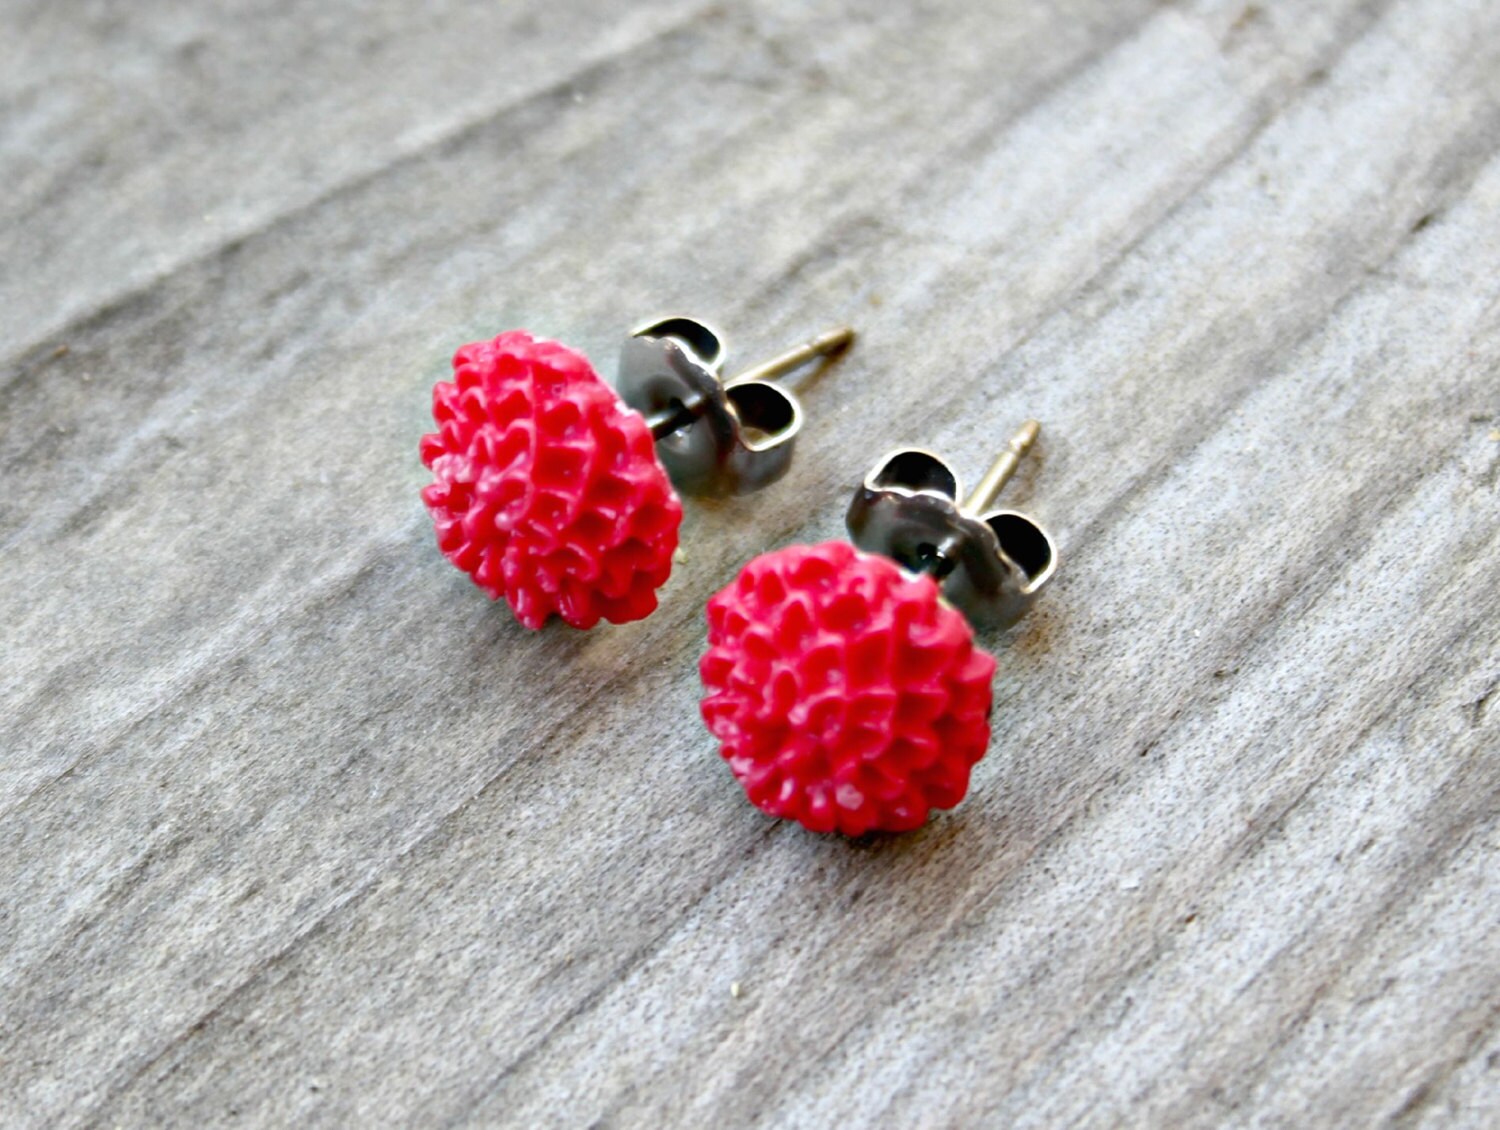 Red Earrings 10mm Wood and Resin Stud Earrings *Tiny POPS Original*